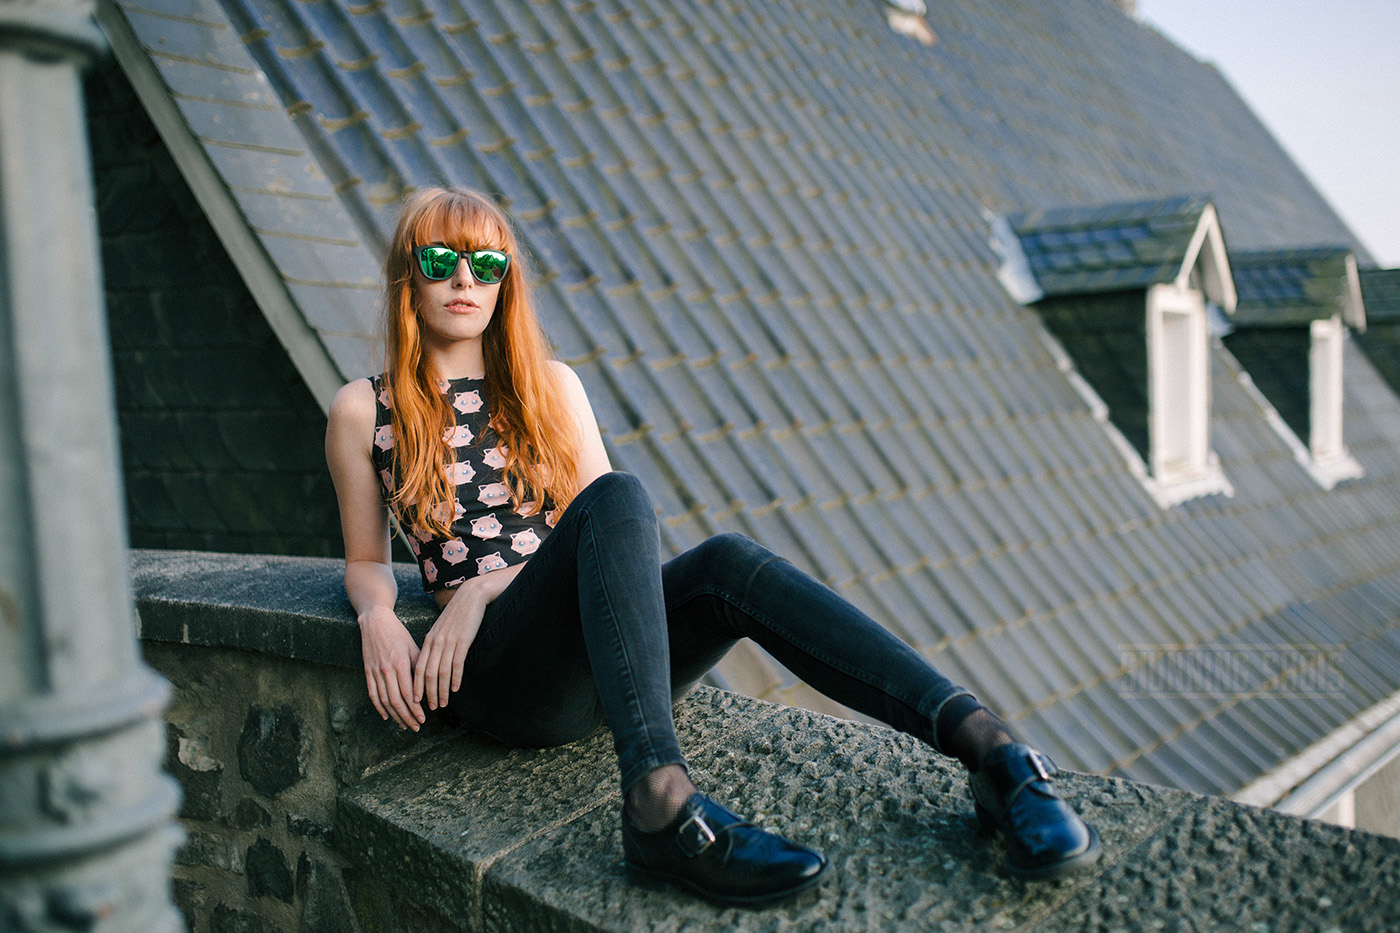 Pokemon redhead instax instant photos historic centre Solingen girl